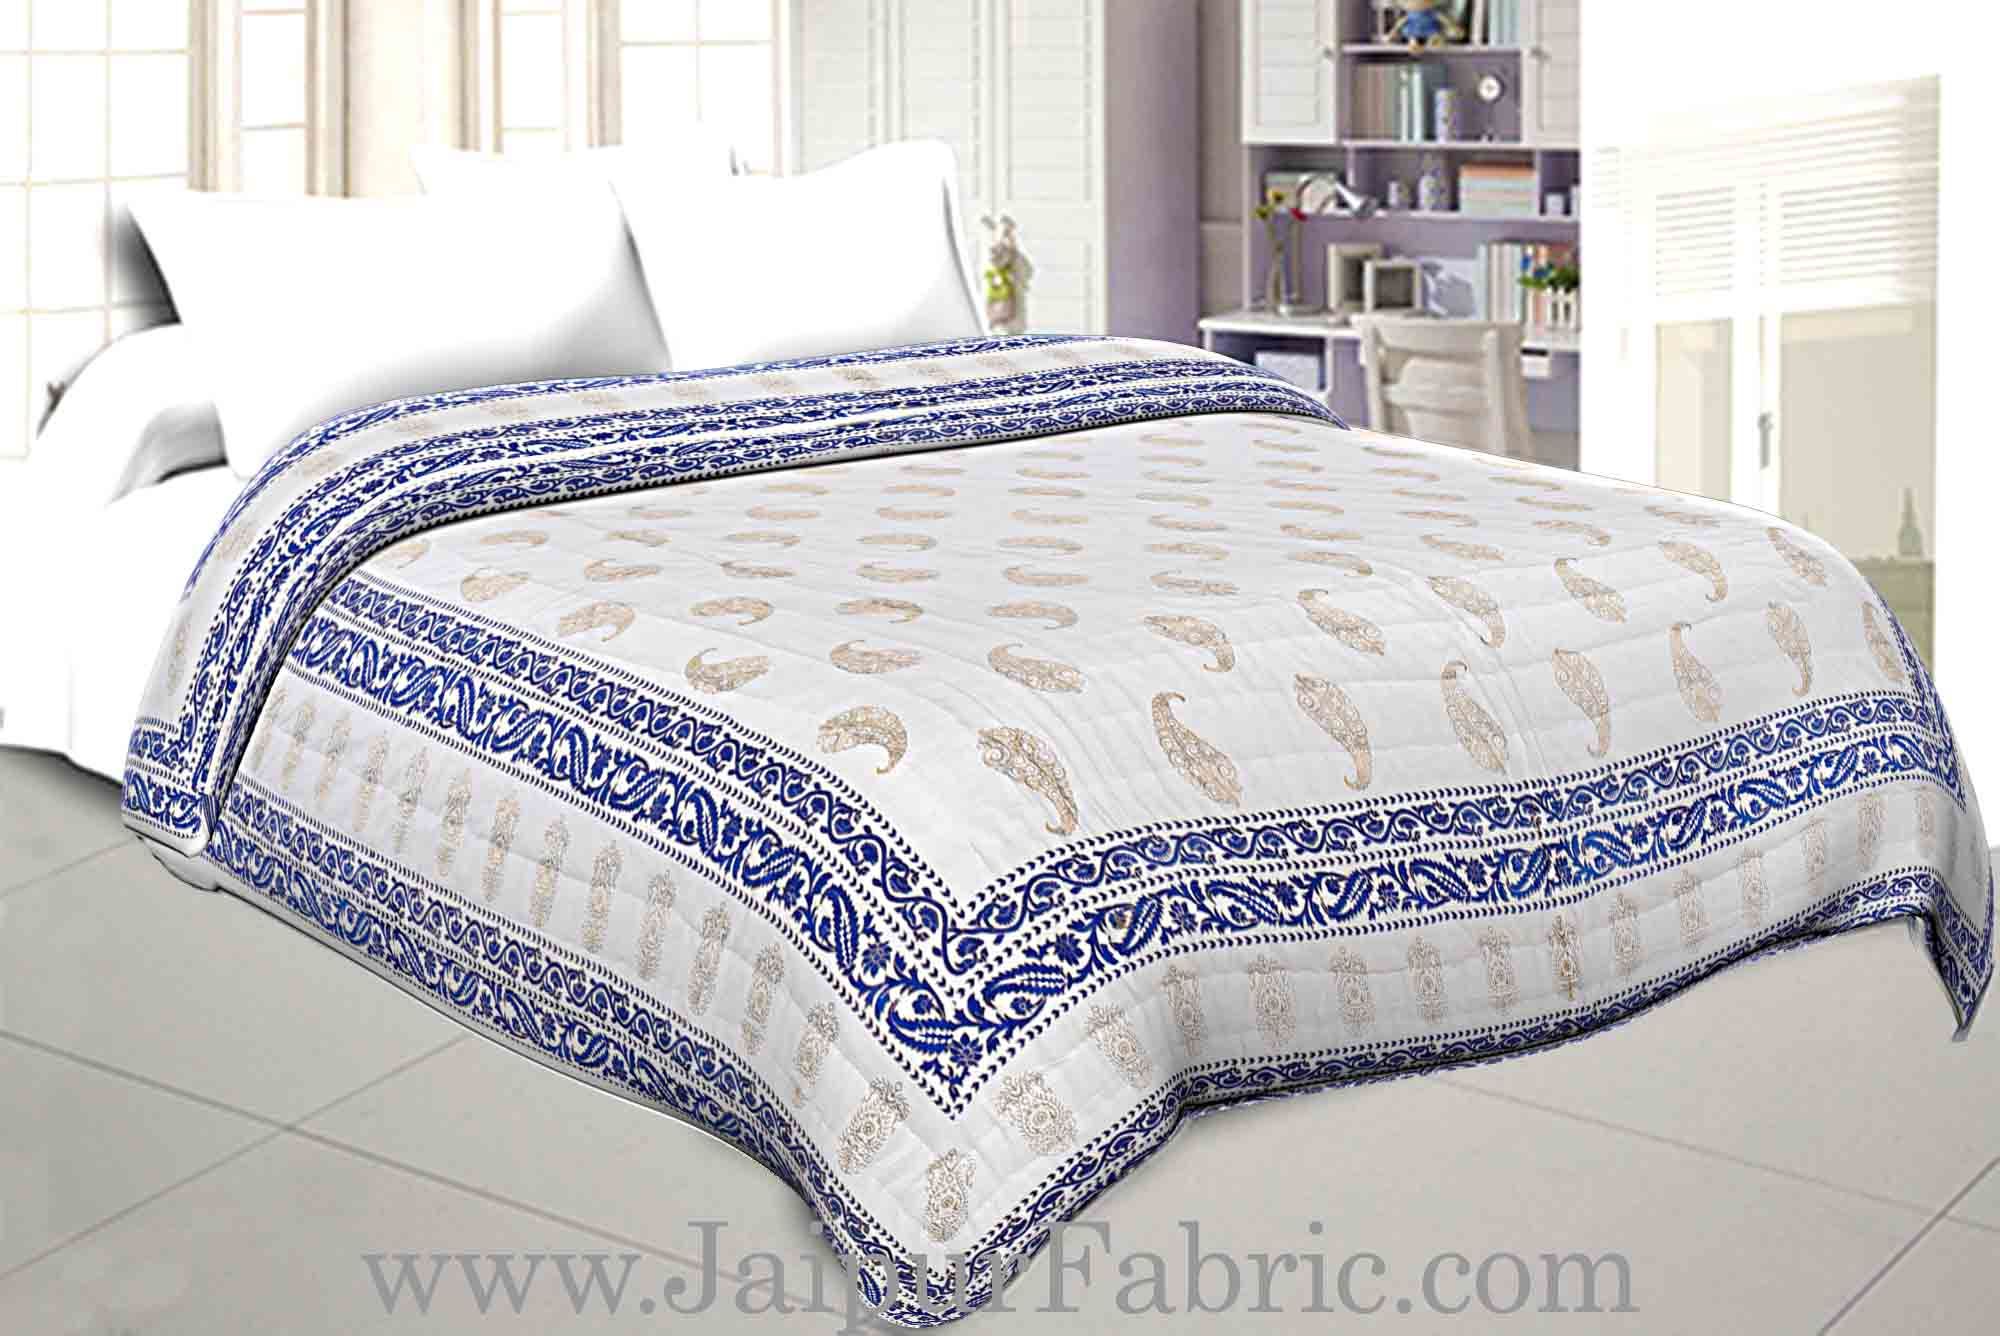 Jaipuri Printed Double Bed Razai Golden Light Blue White base with Paisley pattern